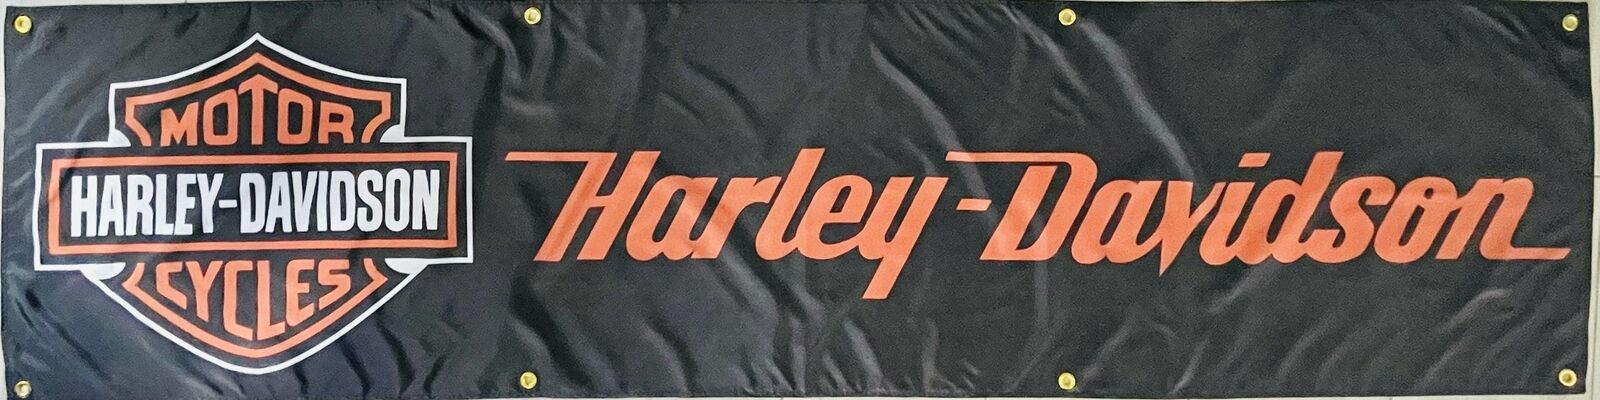 HARLEY-DAVIDSON MOTORCYCLES 2X8FT FLAG BANNER MAN CAVE GARAGE